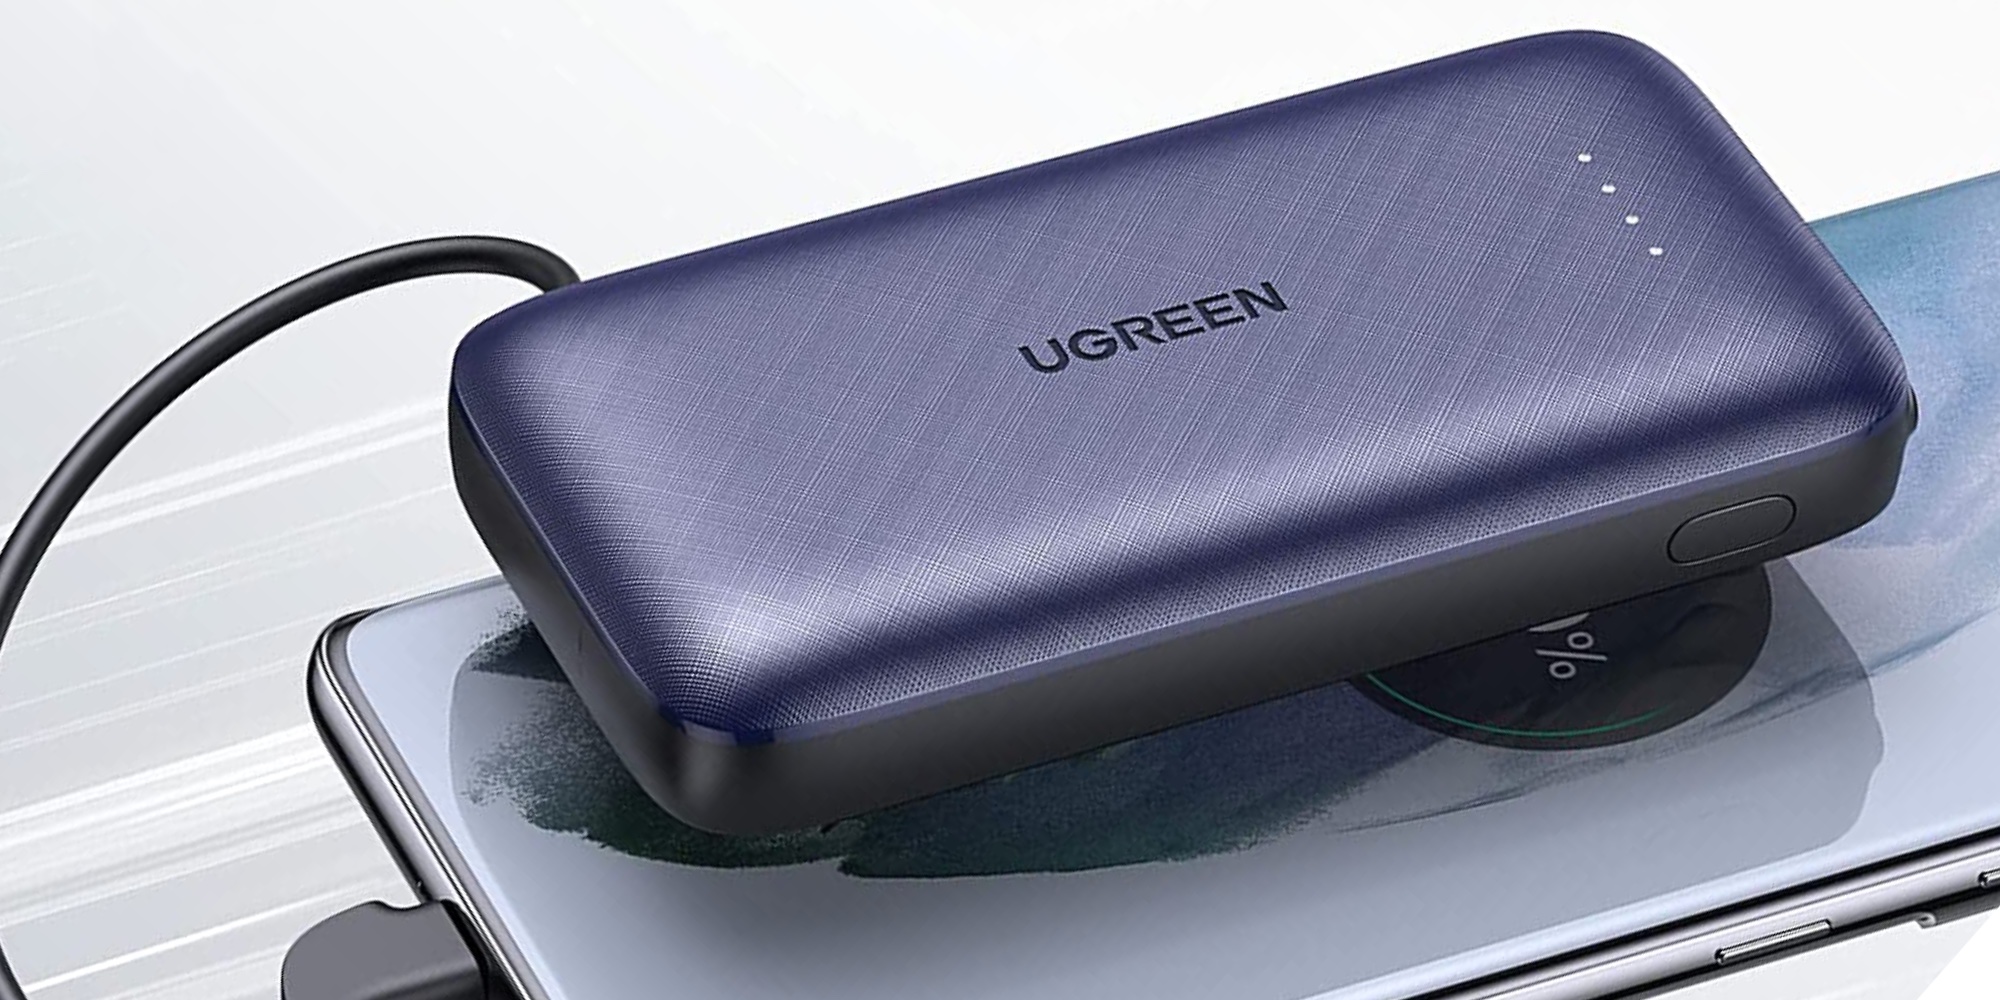 Smartphone Accessories: UGREEN 10000mAh USB-C Power Bank $32, more